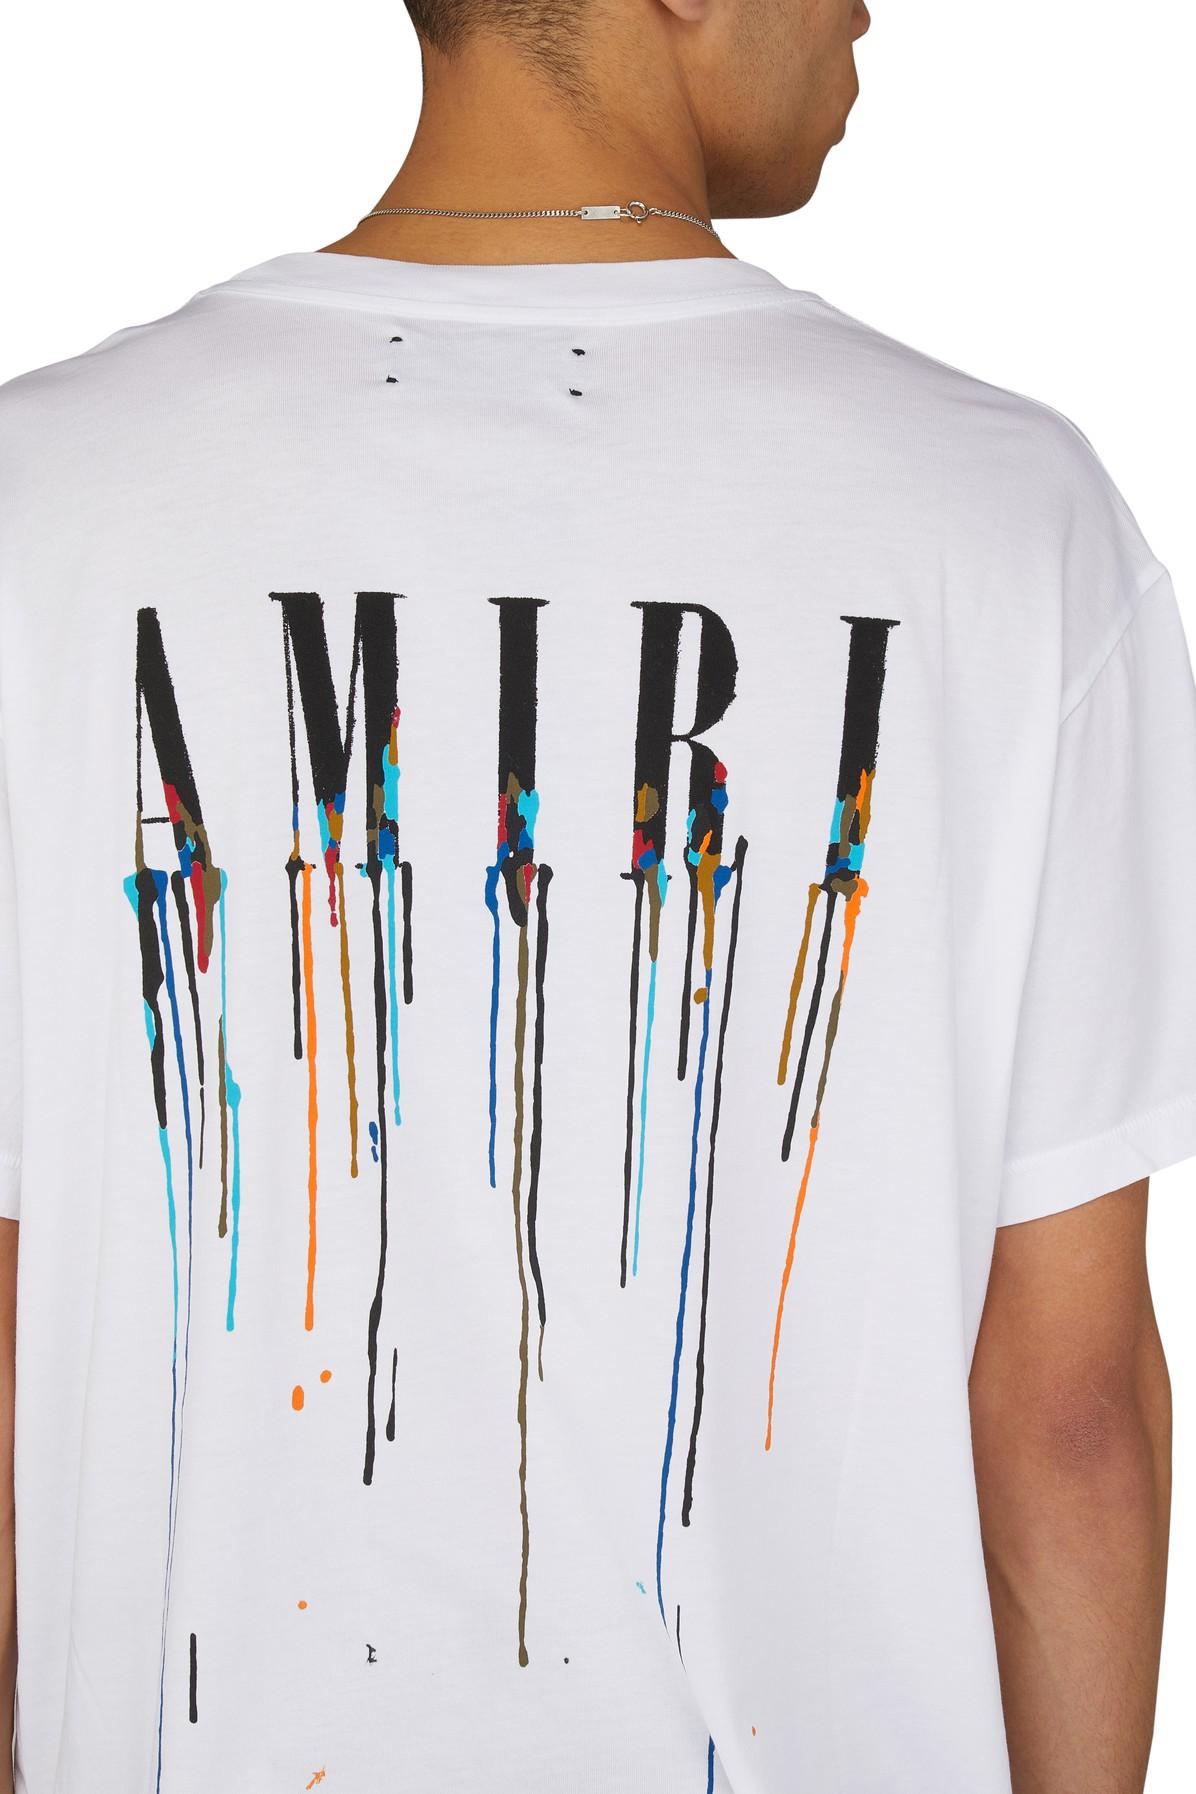 Amiri Paint Drip Logo T-shirt